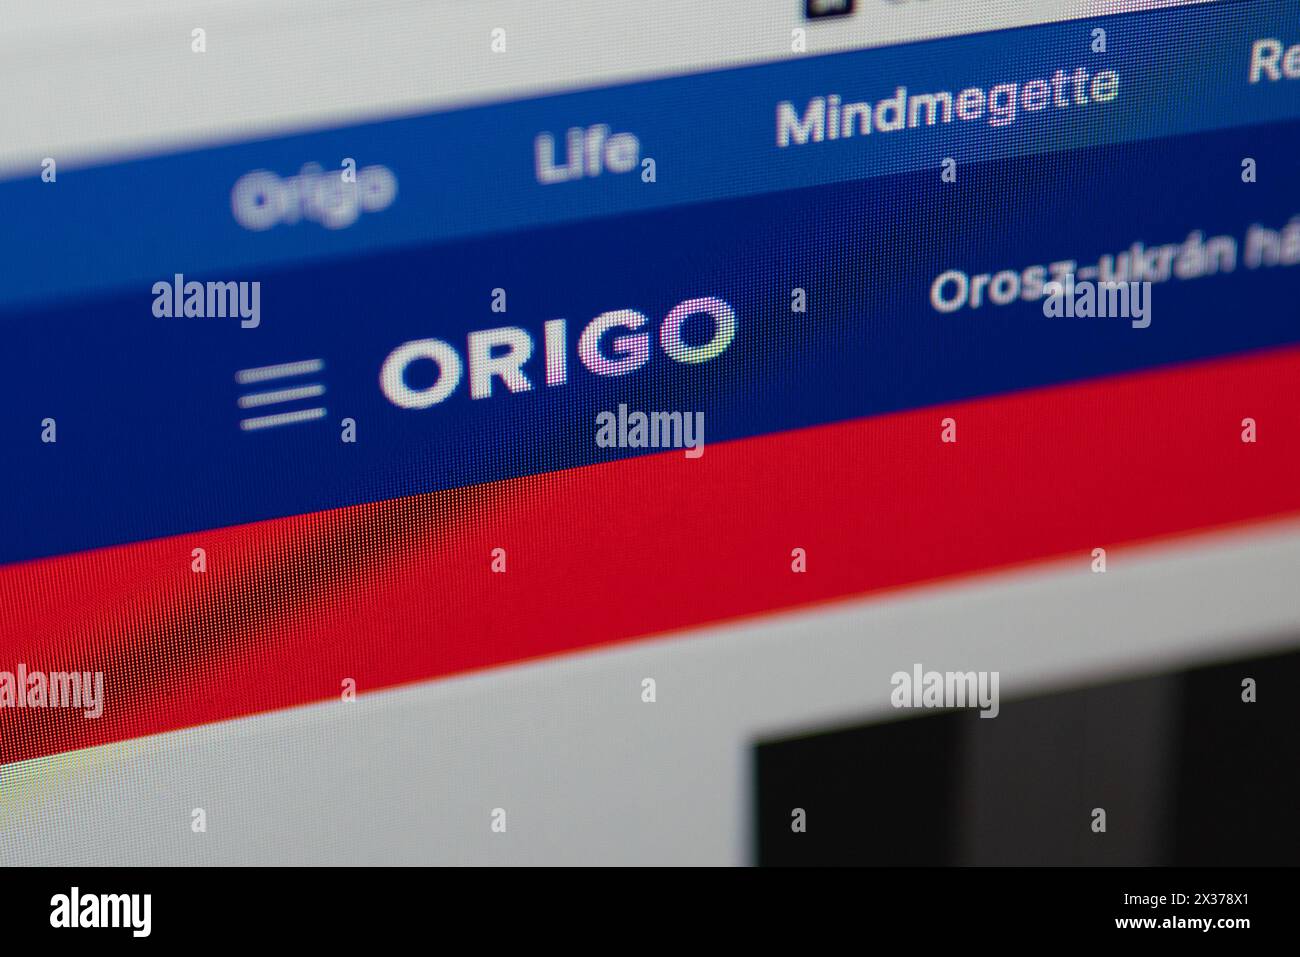 Origo Hungarian Websit illustration screen photo Stock Photo